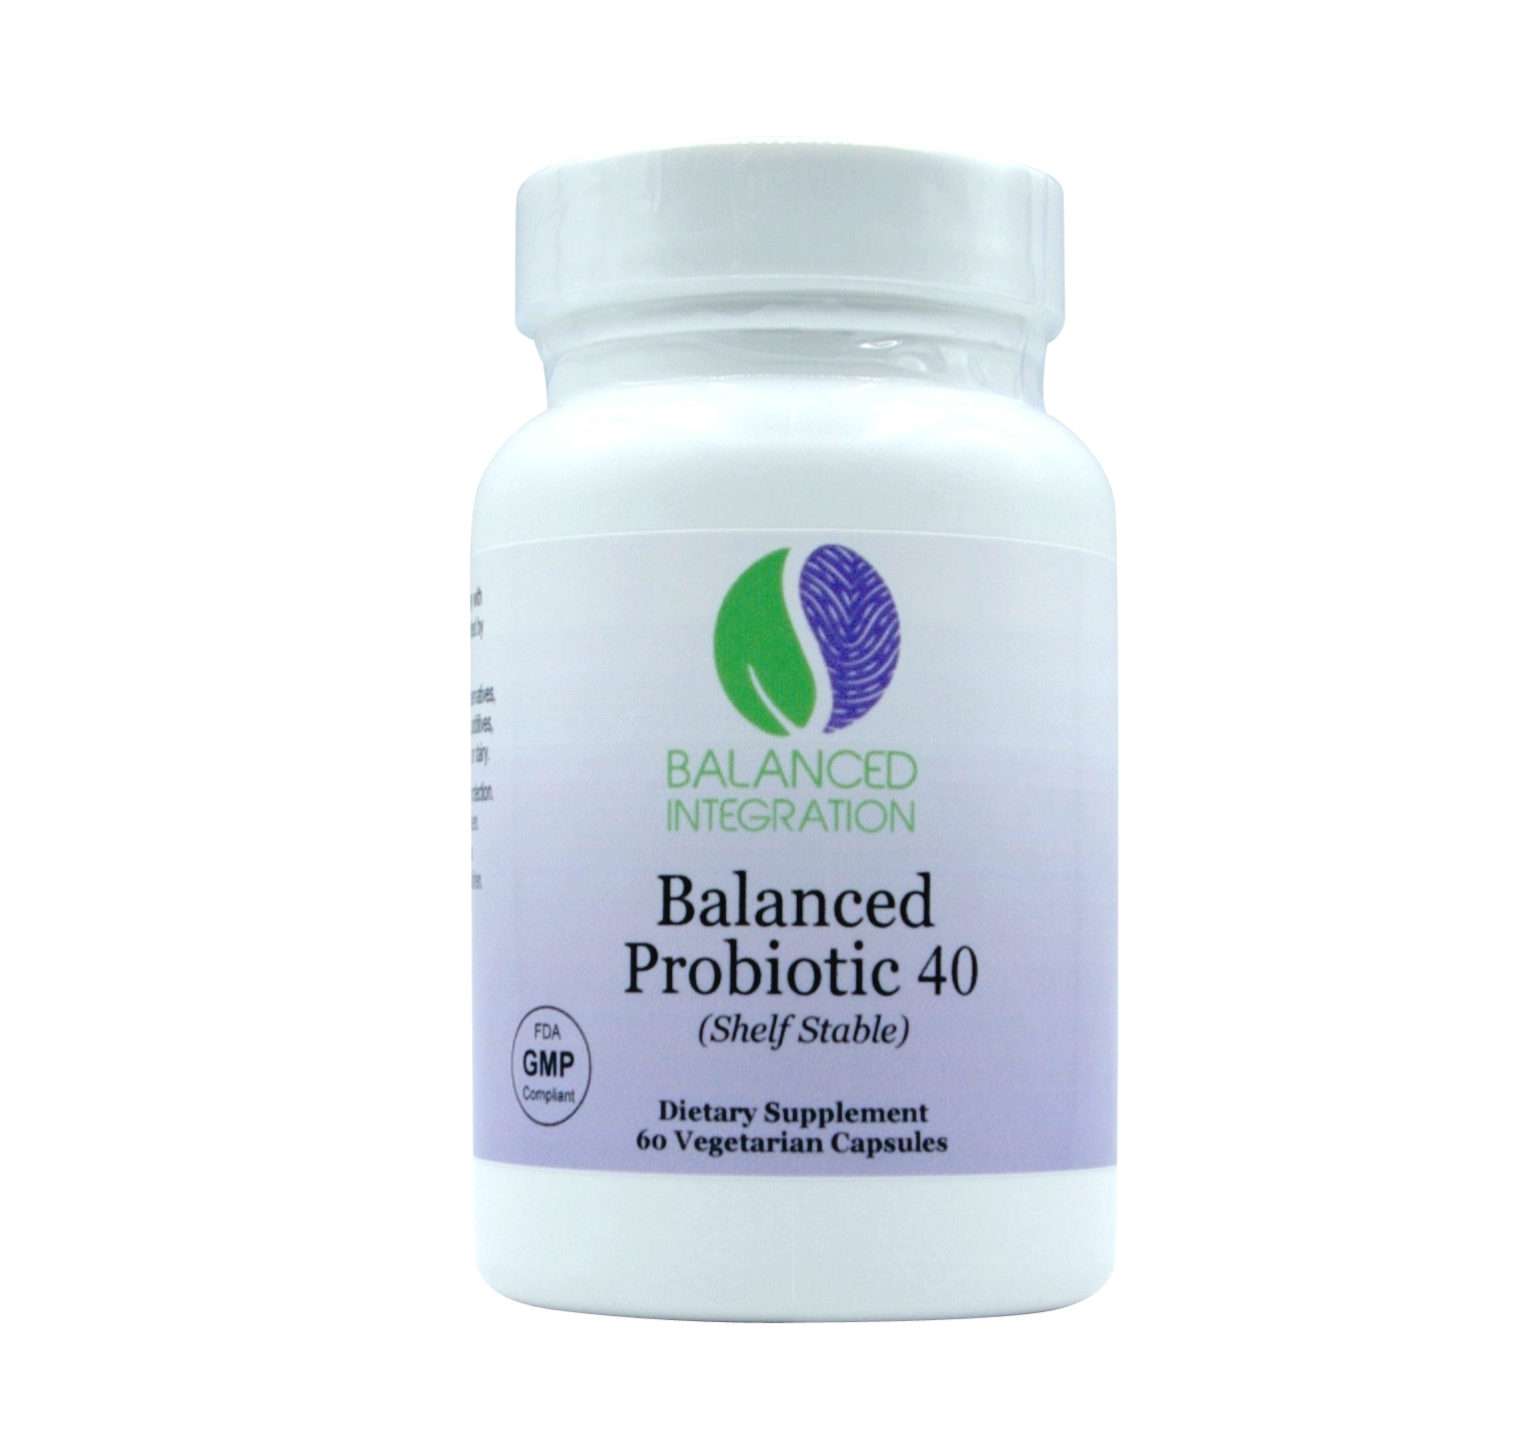 Balanced Probiotic 40 (shelf stable)